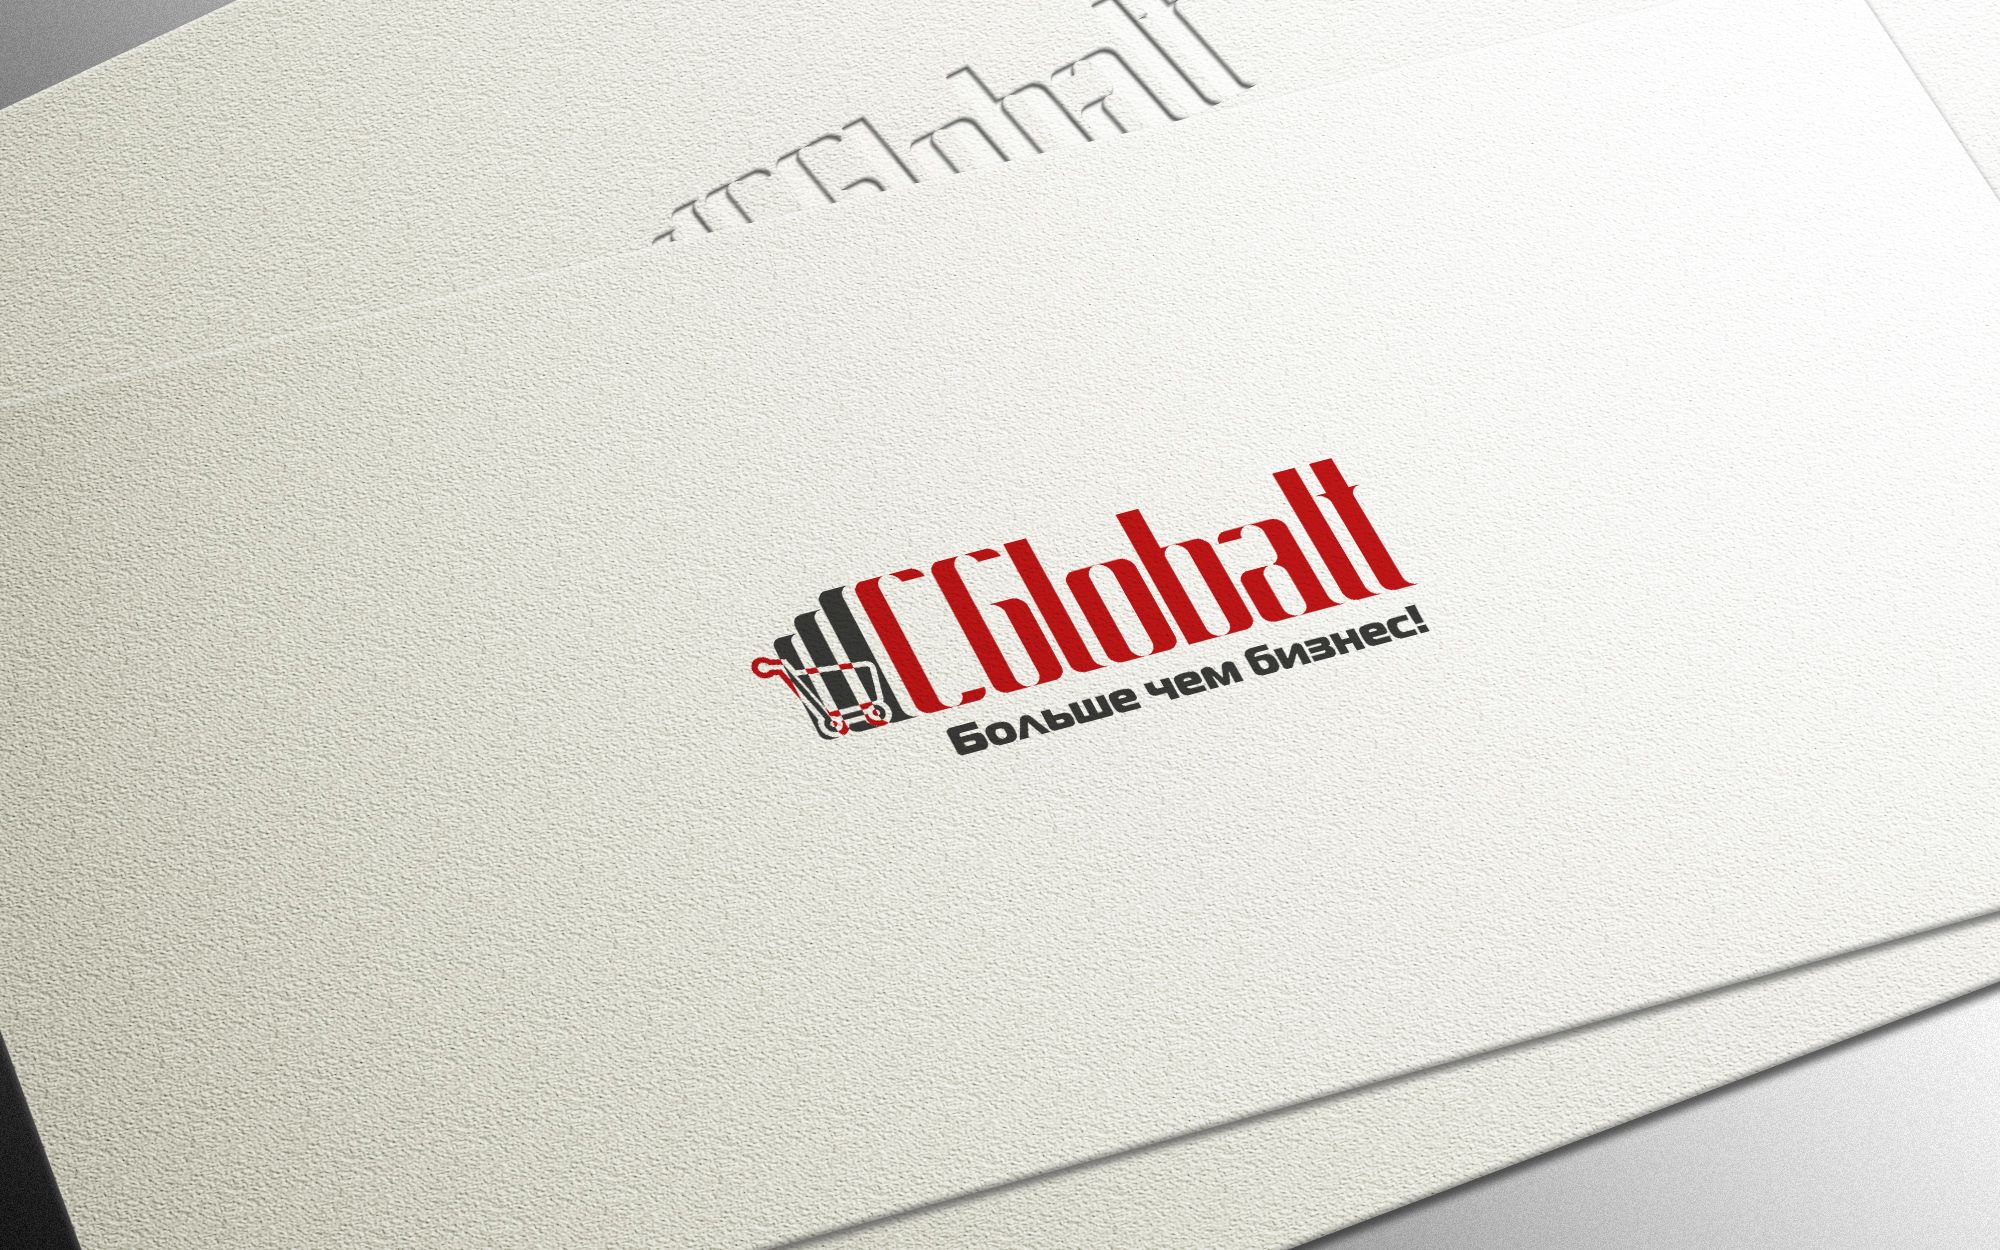 Логотип для CGlobalt - дизайнер Gas-Min